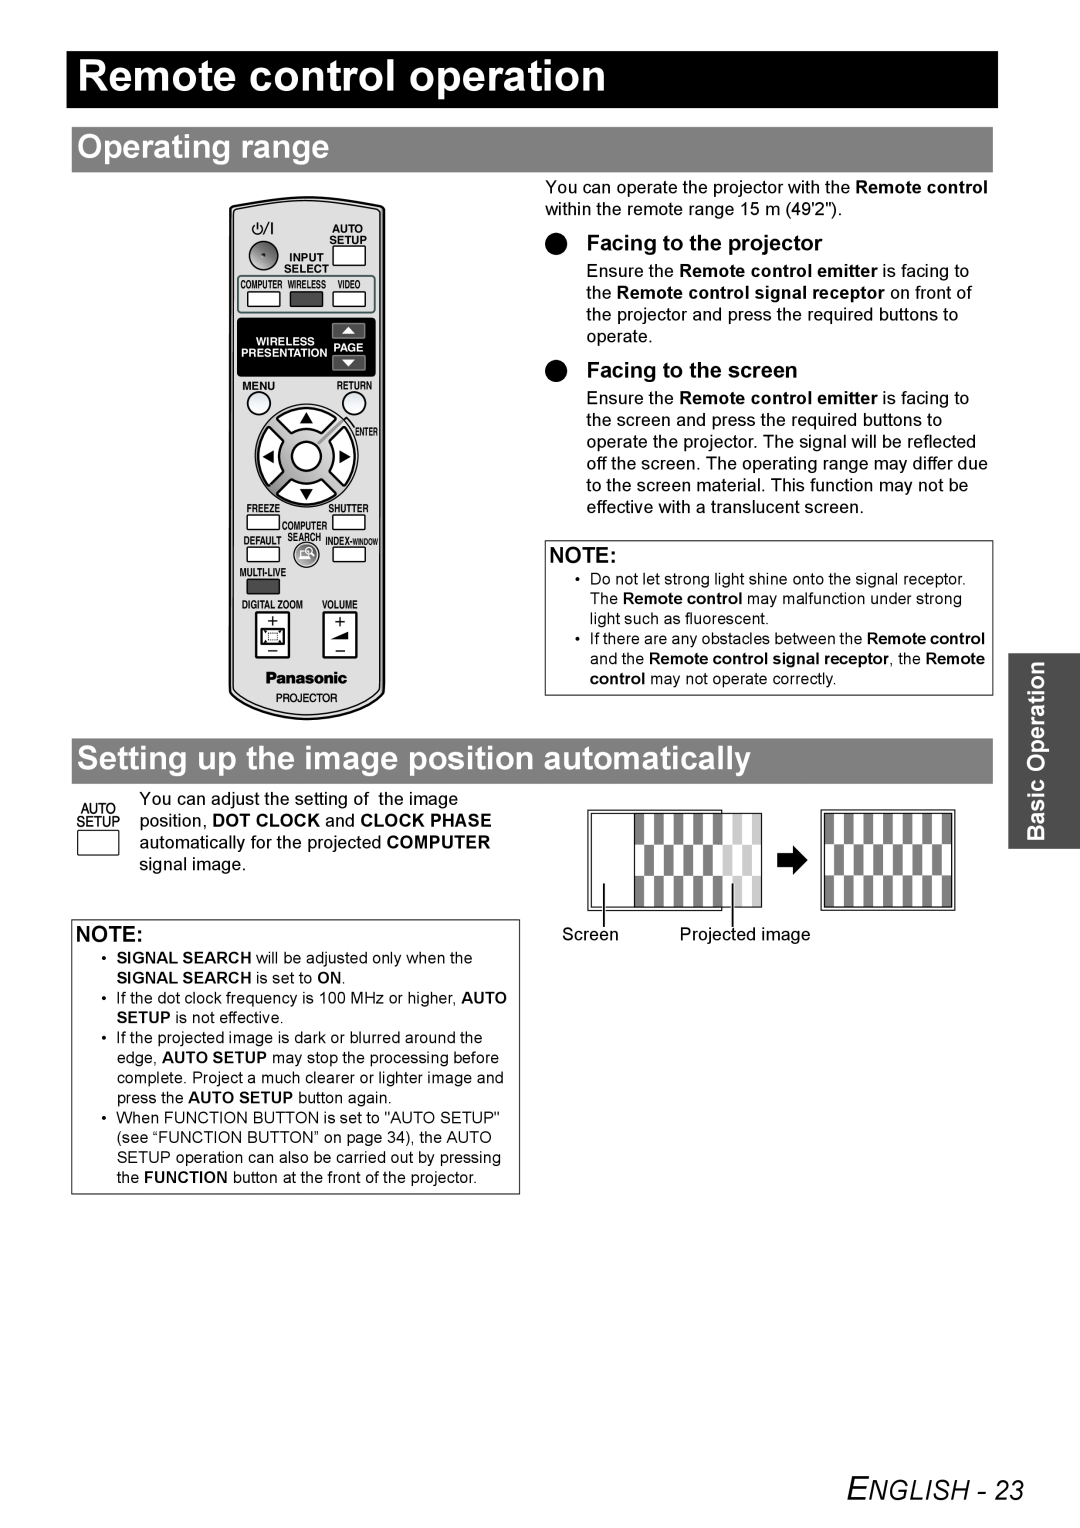 Panasonic PT-LB51NTU Remote control operation, Operating range, Setting up the image position automatically, Basic 